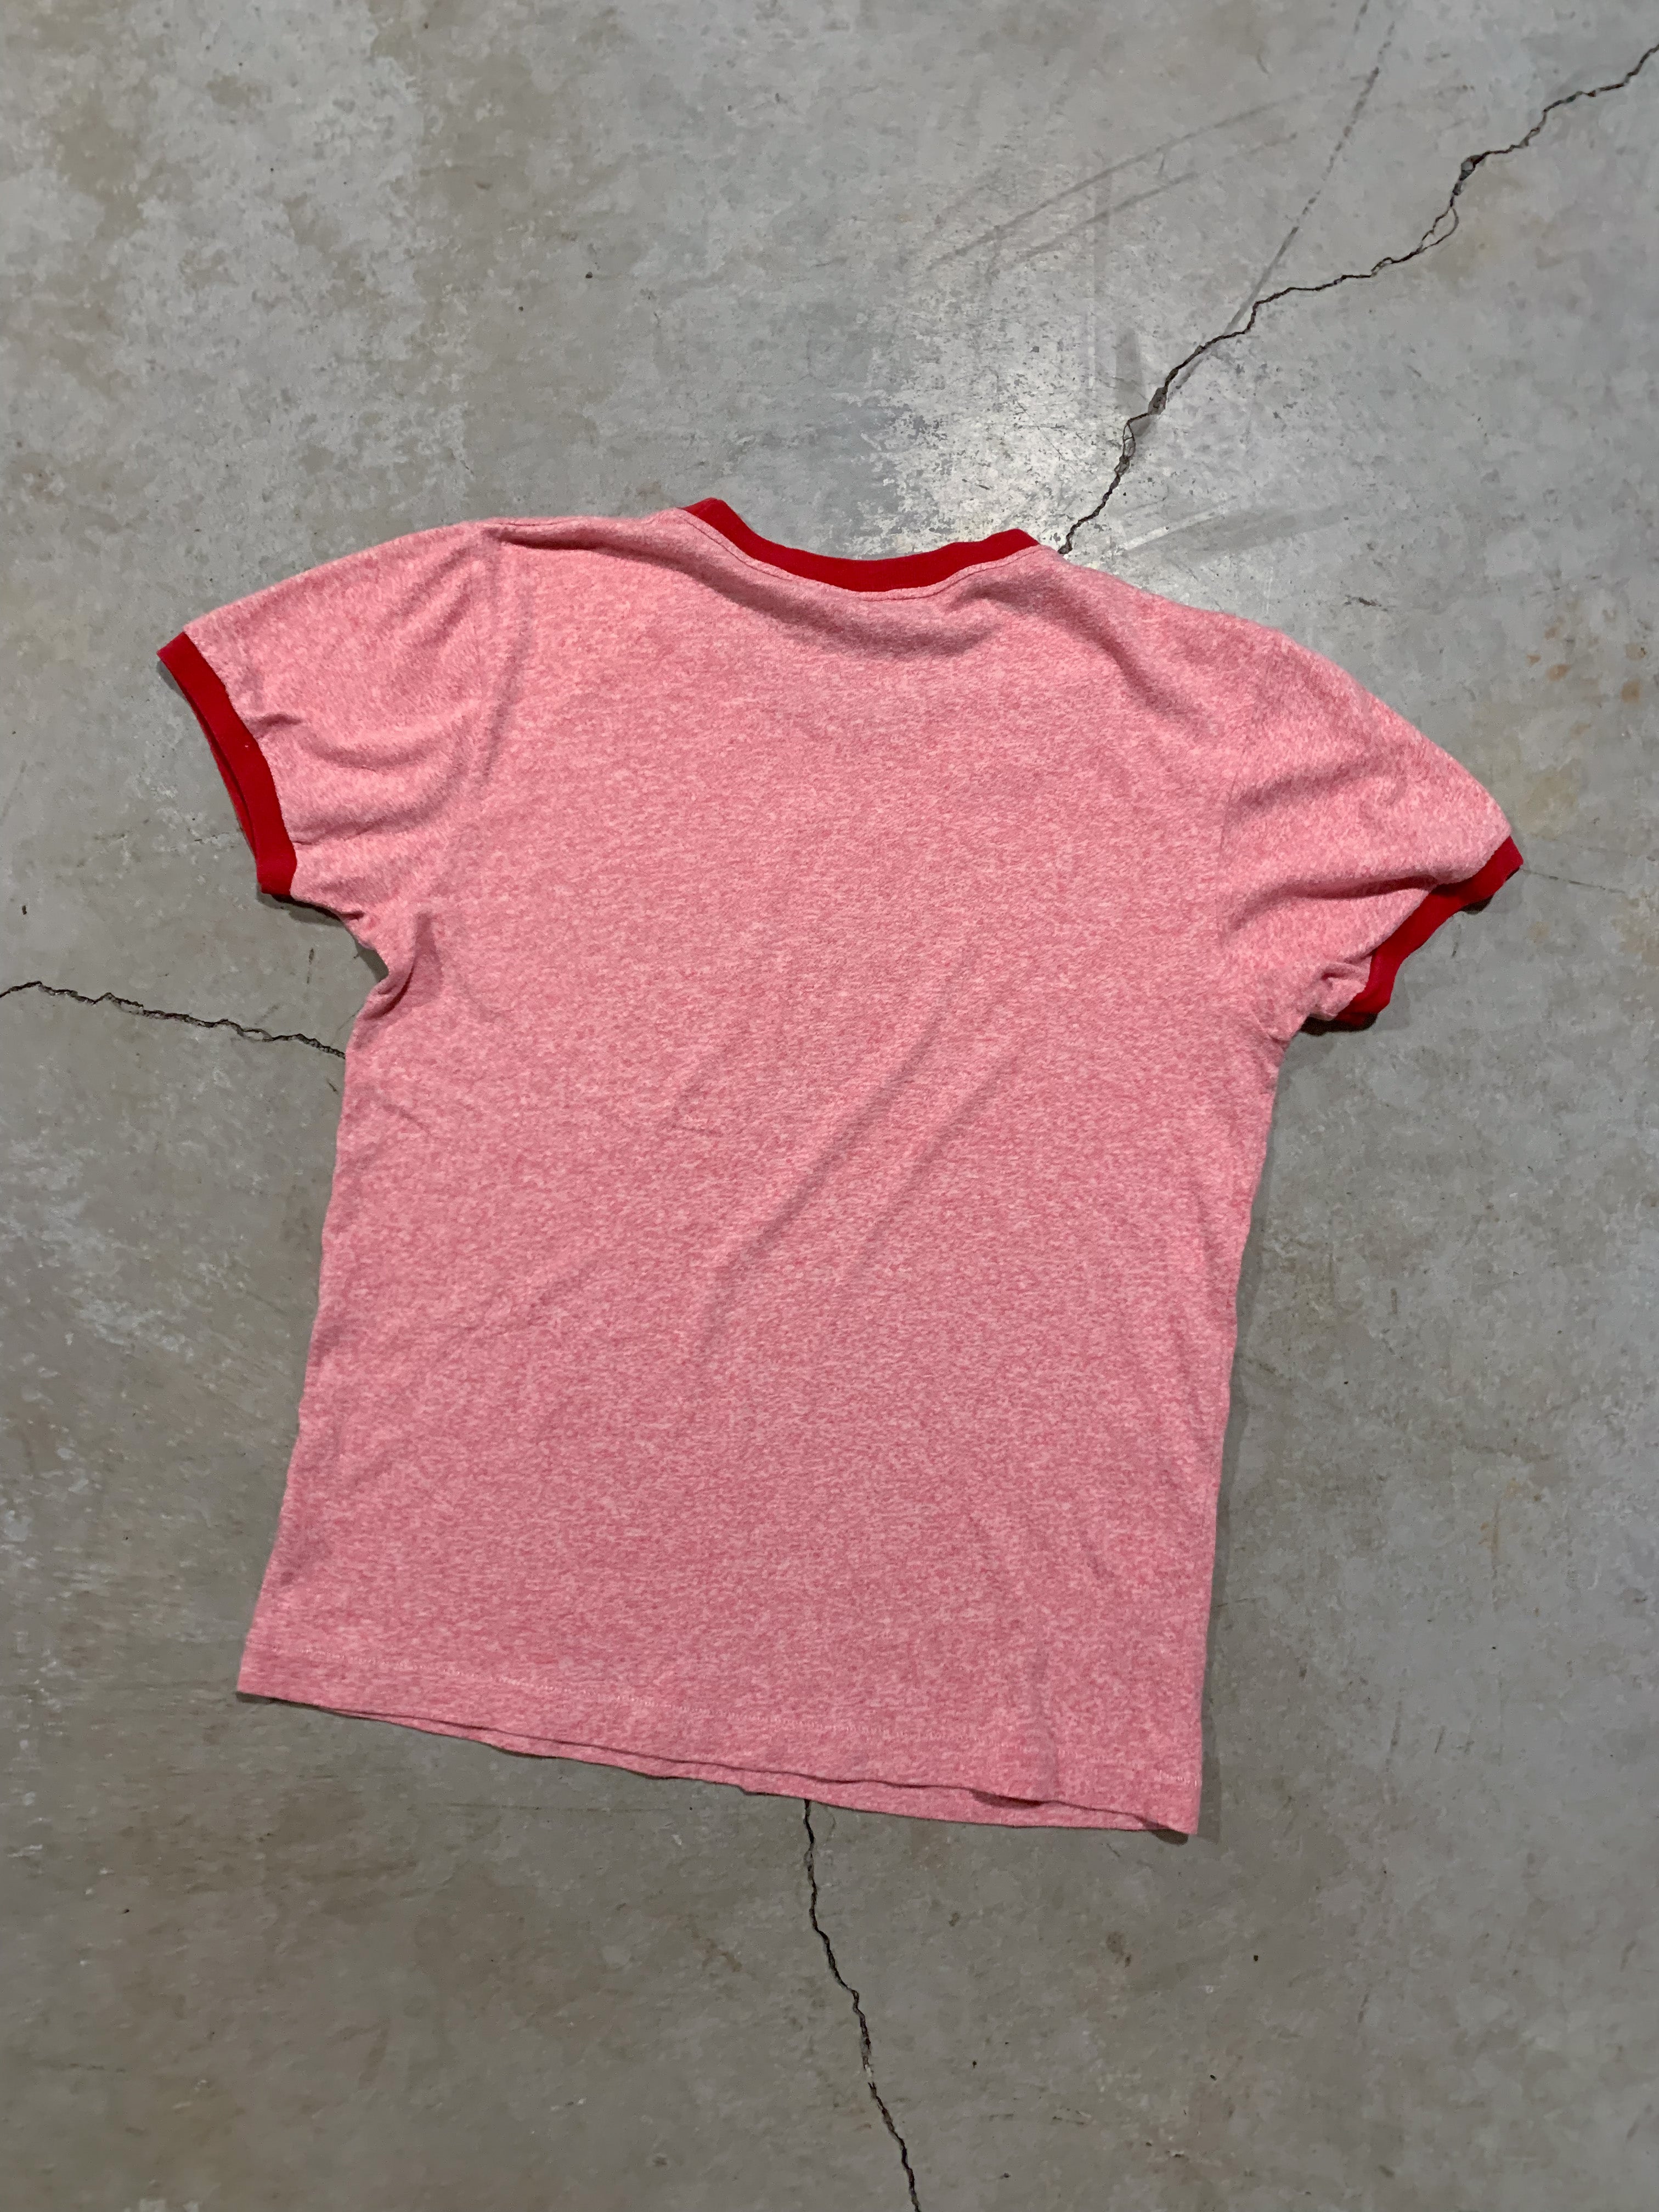 1980s “San Andreas Fault” Ringer Shirt [S]